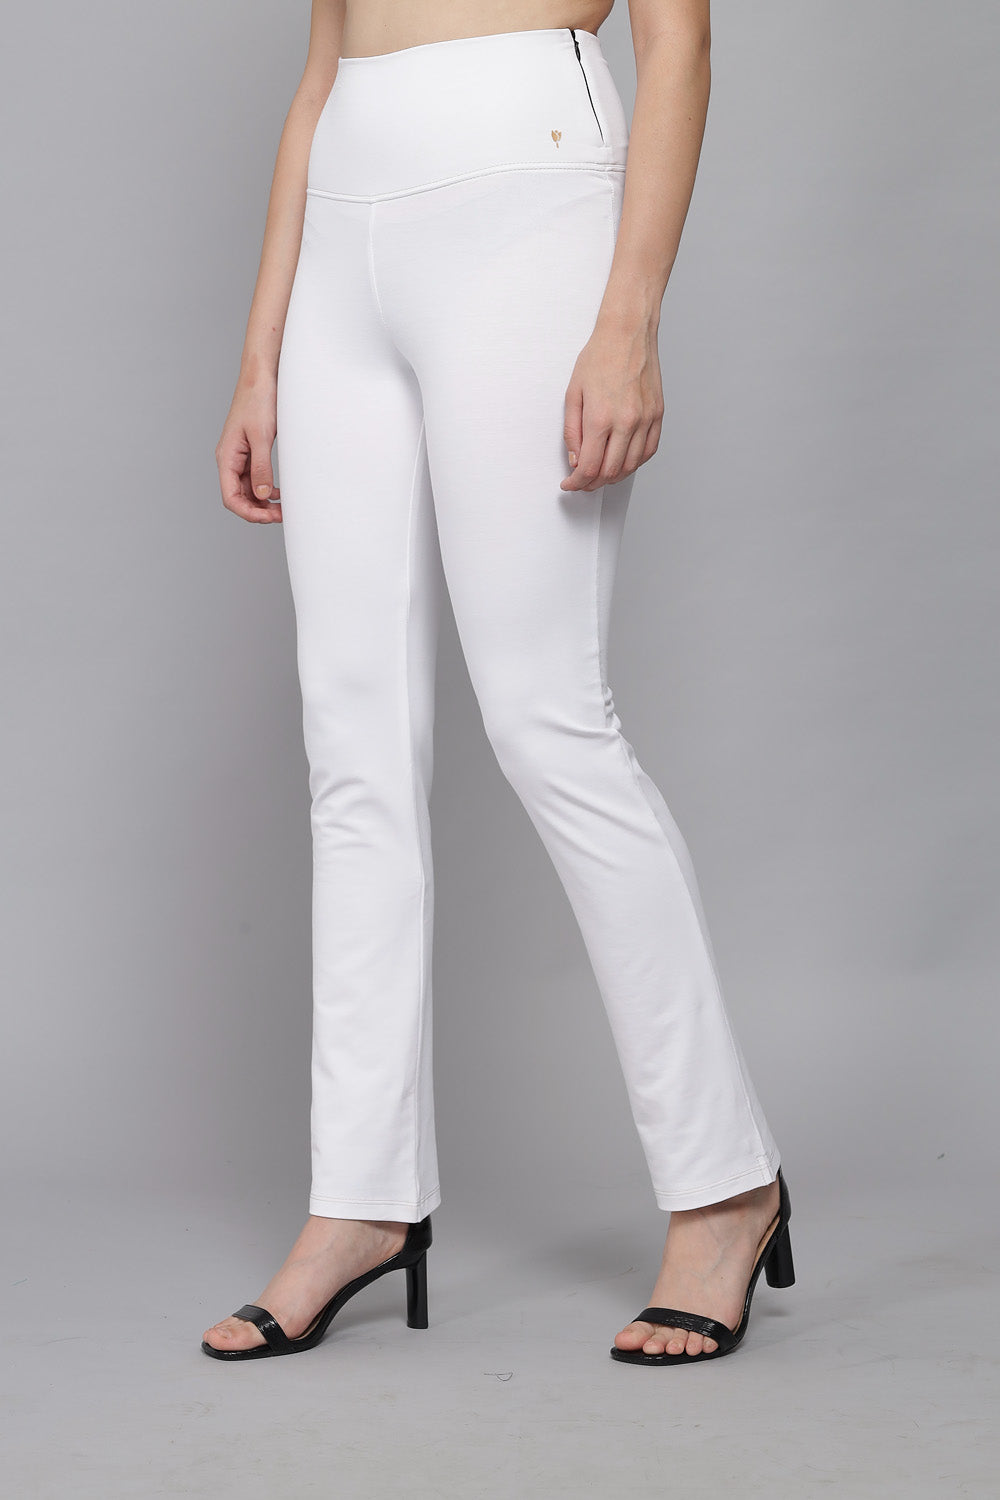 WHITE NARROW FIT PANTS – Tulip Comfort Wear